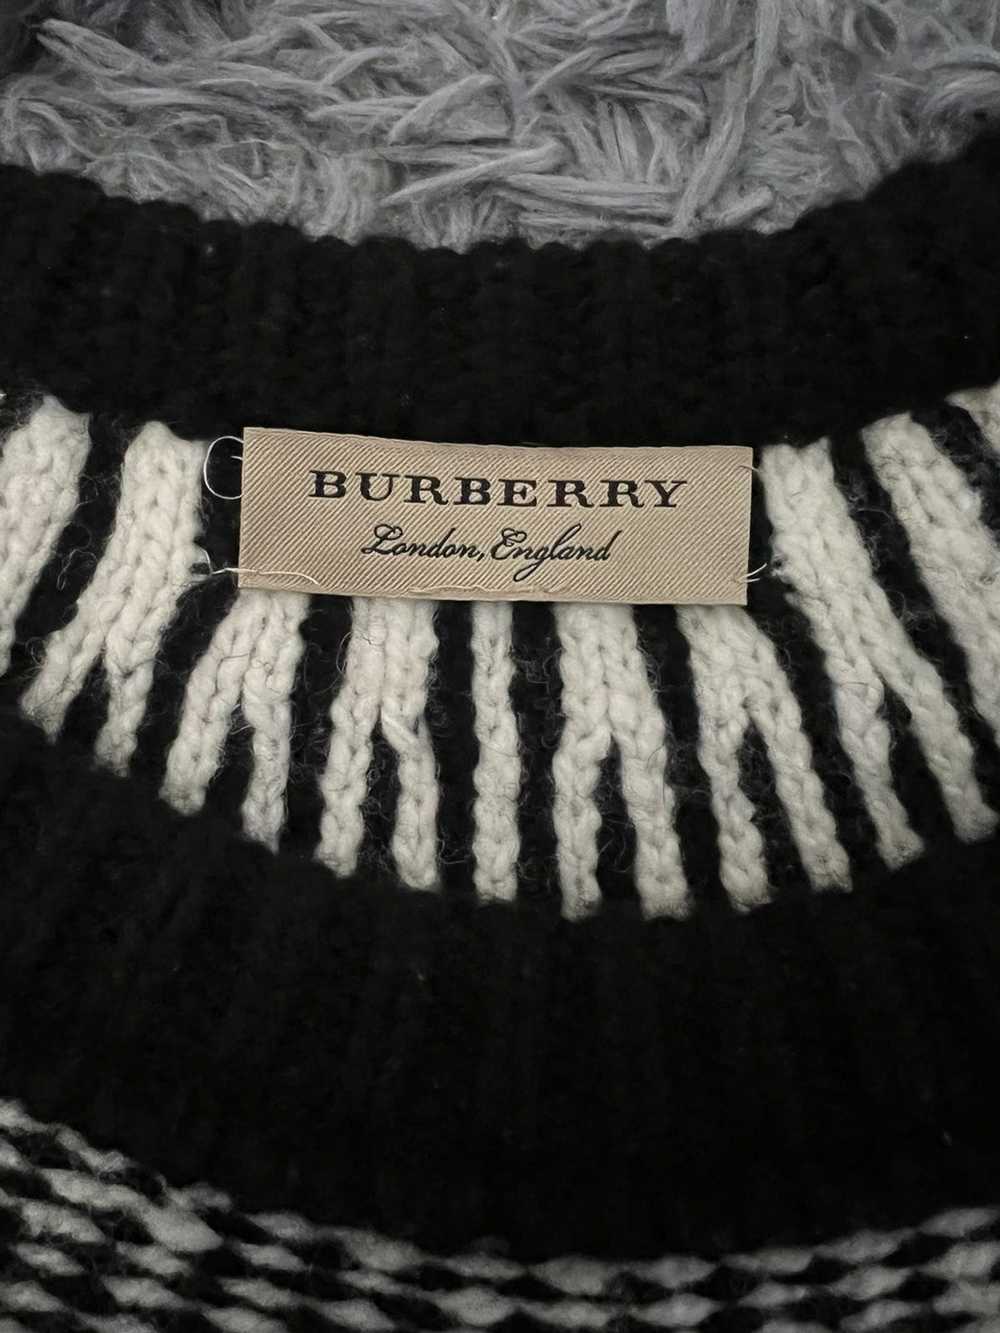 Burberry Burberry Rycroft Fair Isle Sweater - image 3